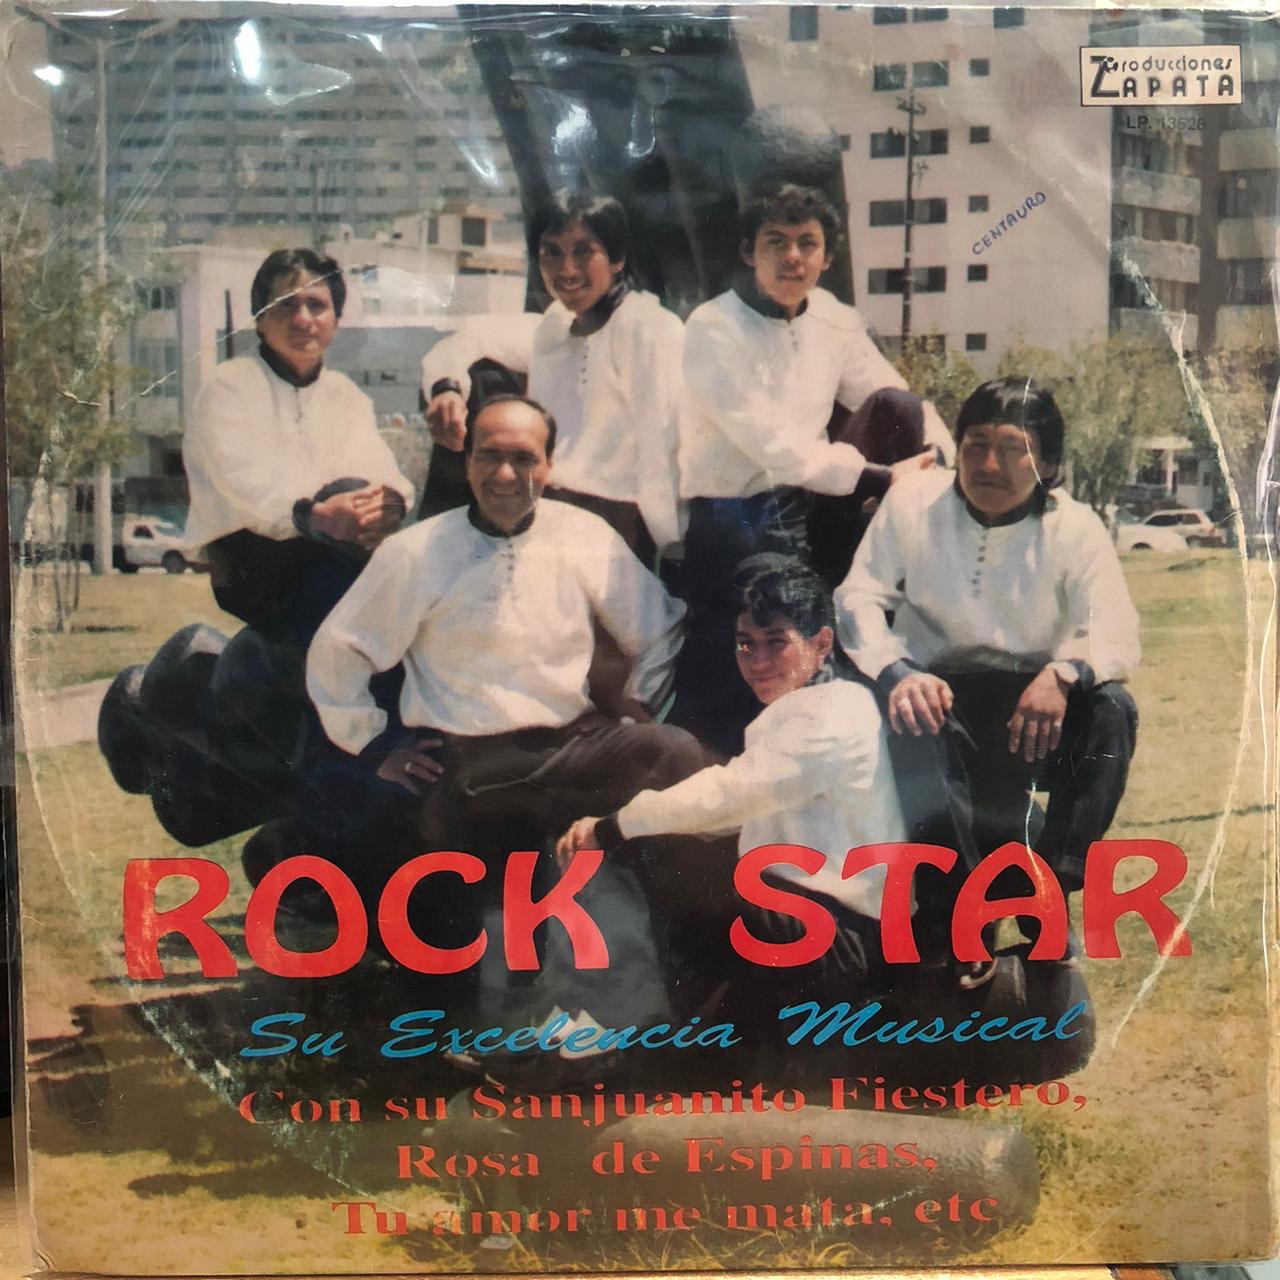 ROCK STAR - CON SU SANJUANITO FIESTERO, ROSA DE ESPINAS, TU AMOR ME MATA, ETC LP